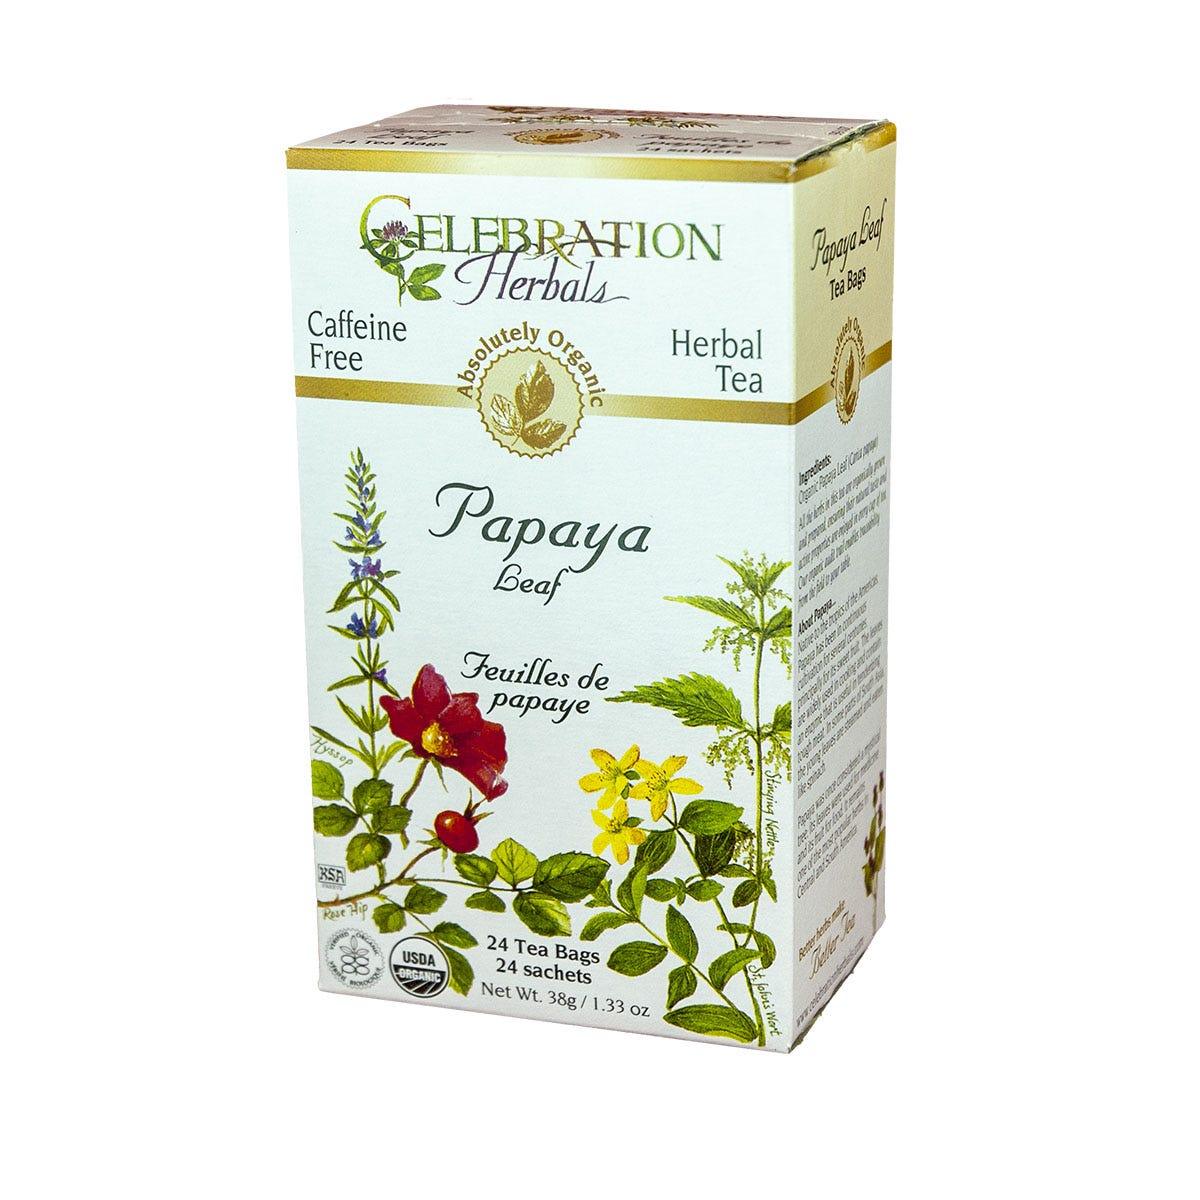 Celebration Herbals Organic Papaya Leaf Tea 24 bags